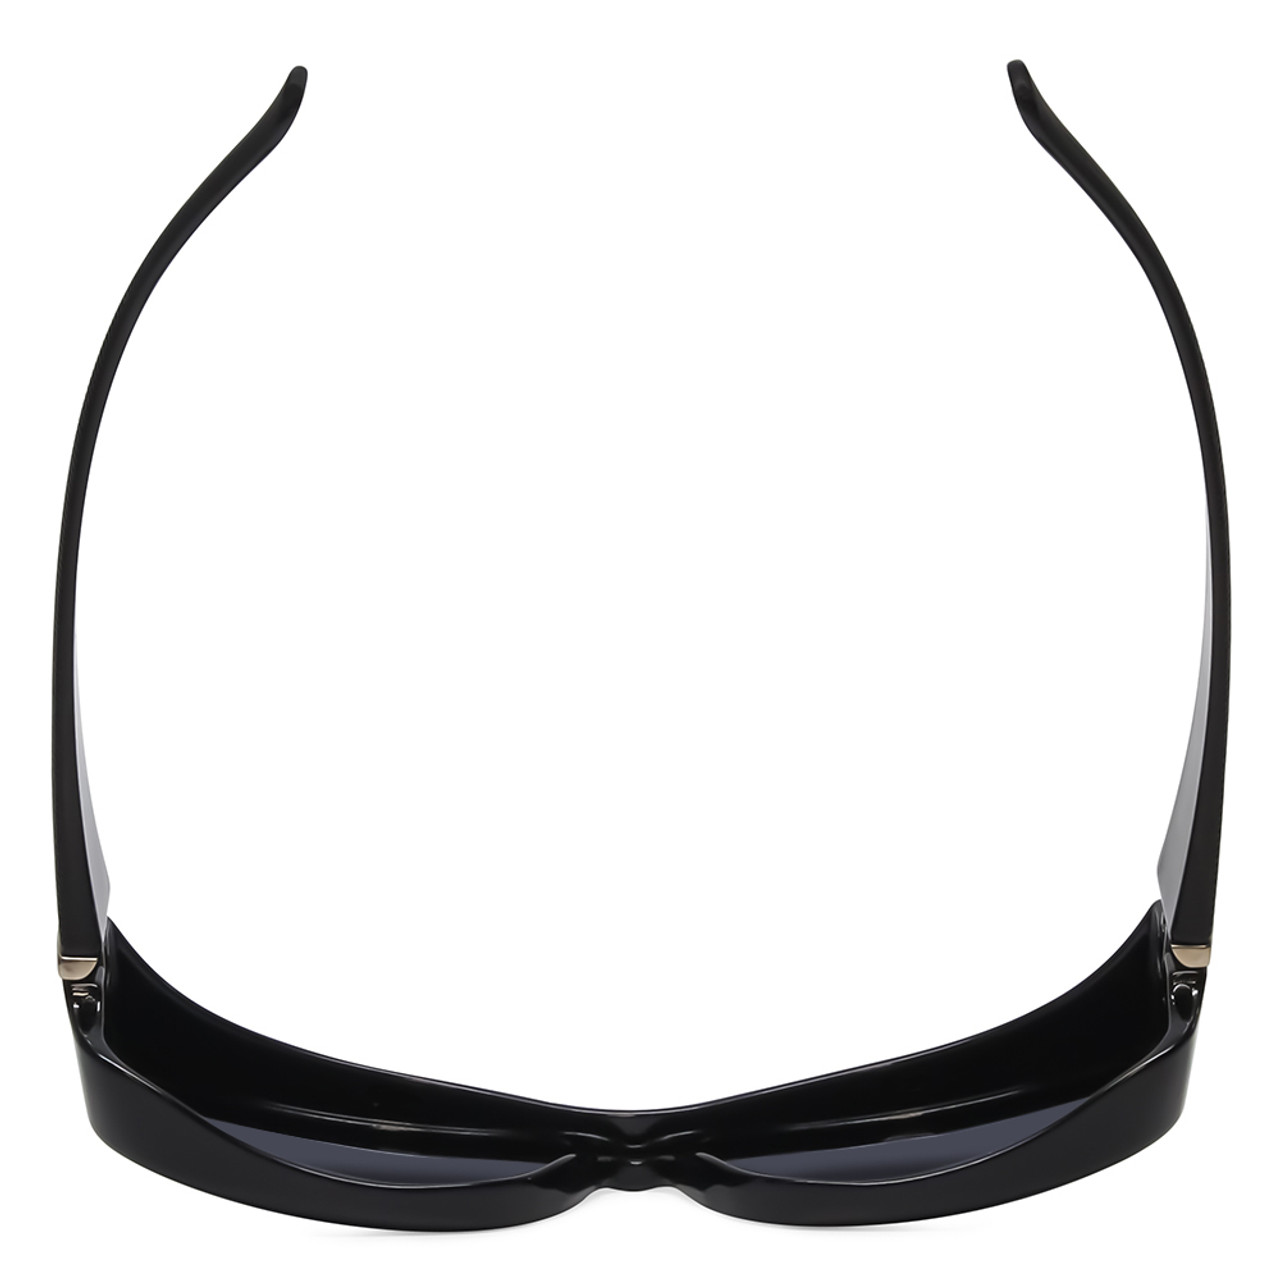 Foster Grant Women's Cat Eye Sunglasses